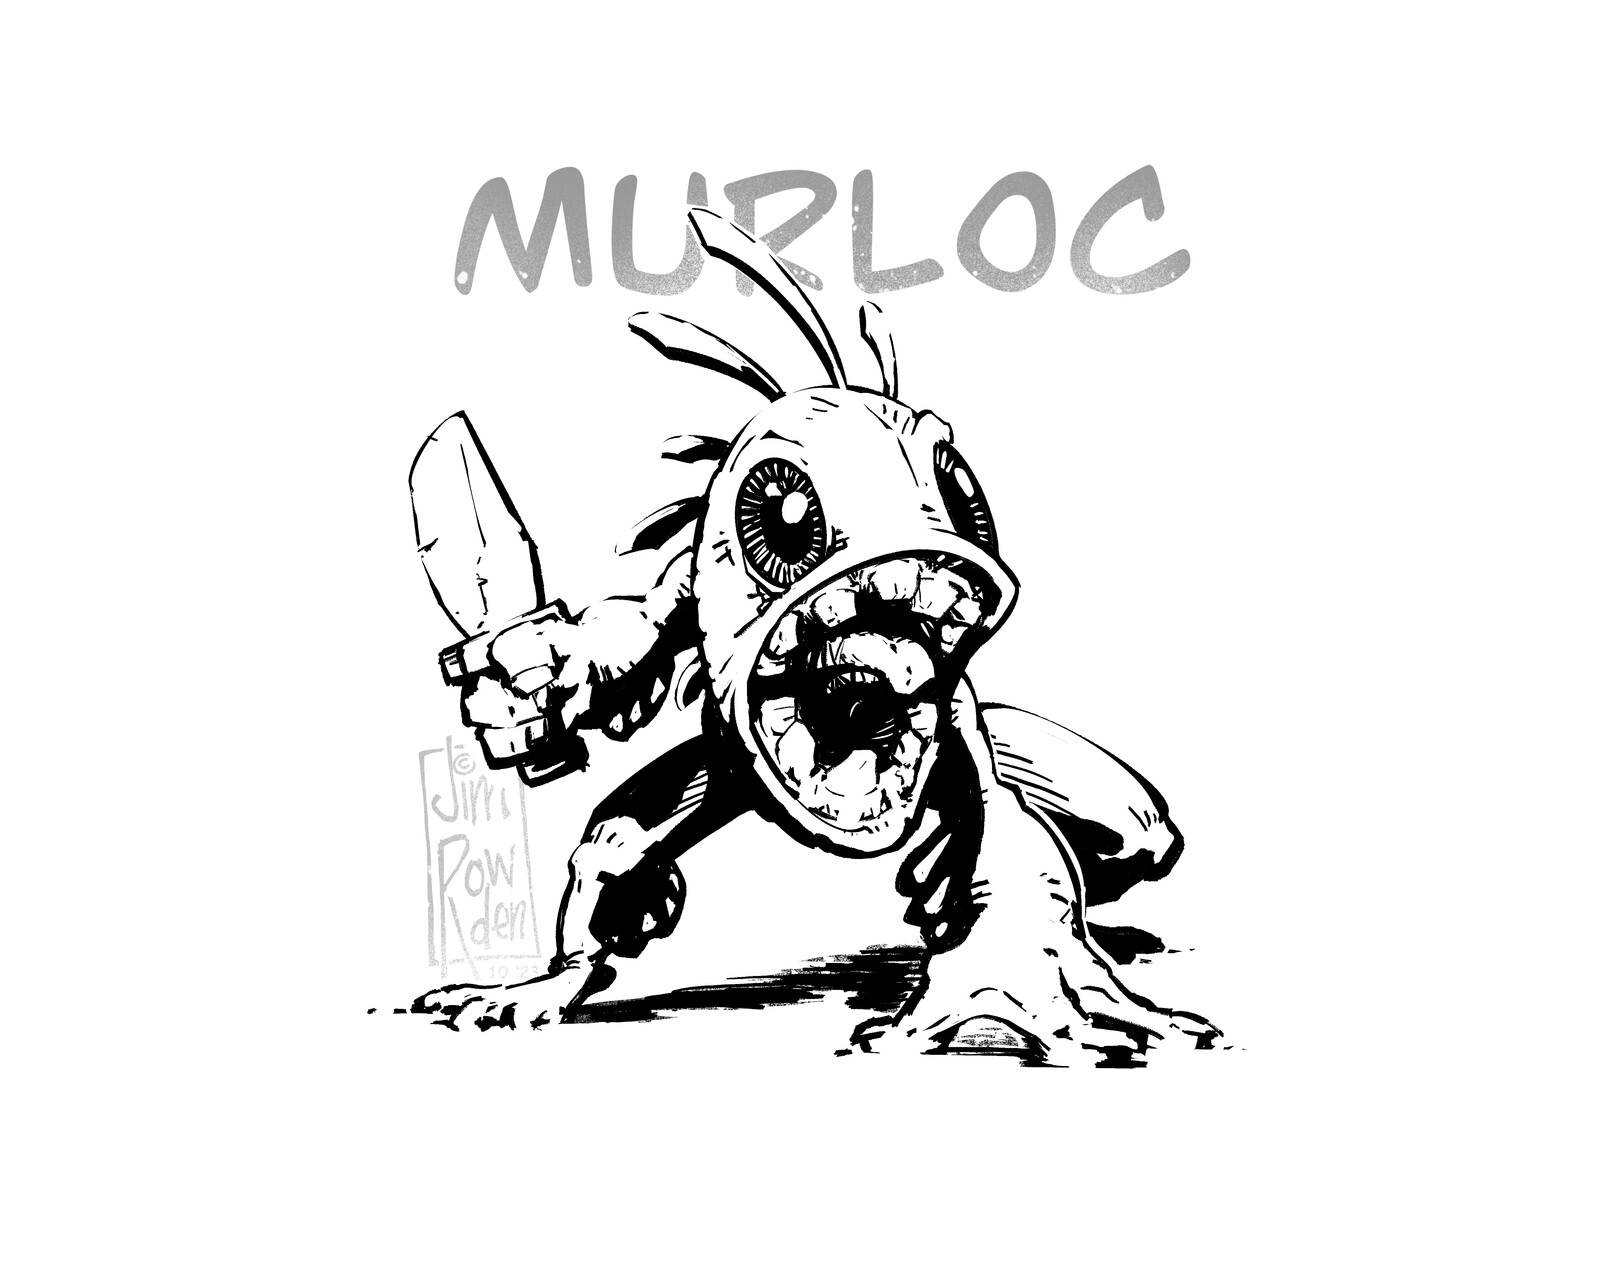 The Murloc